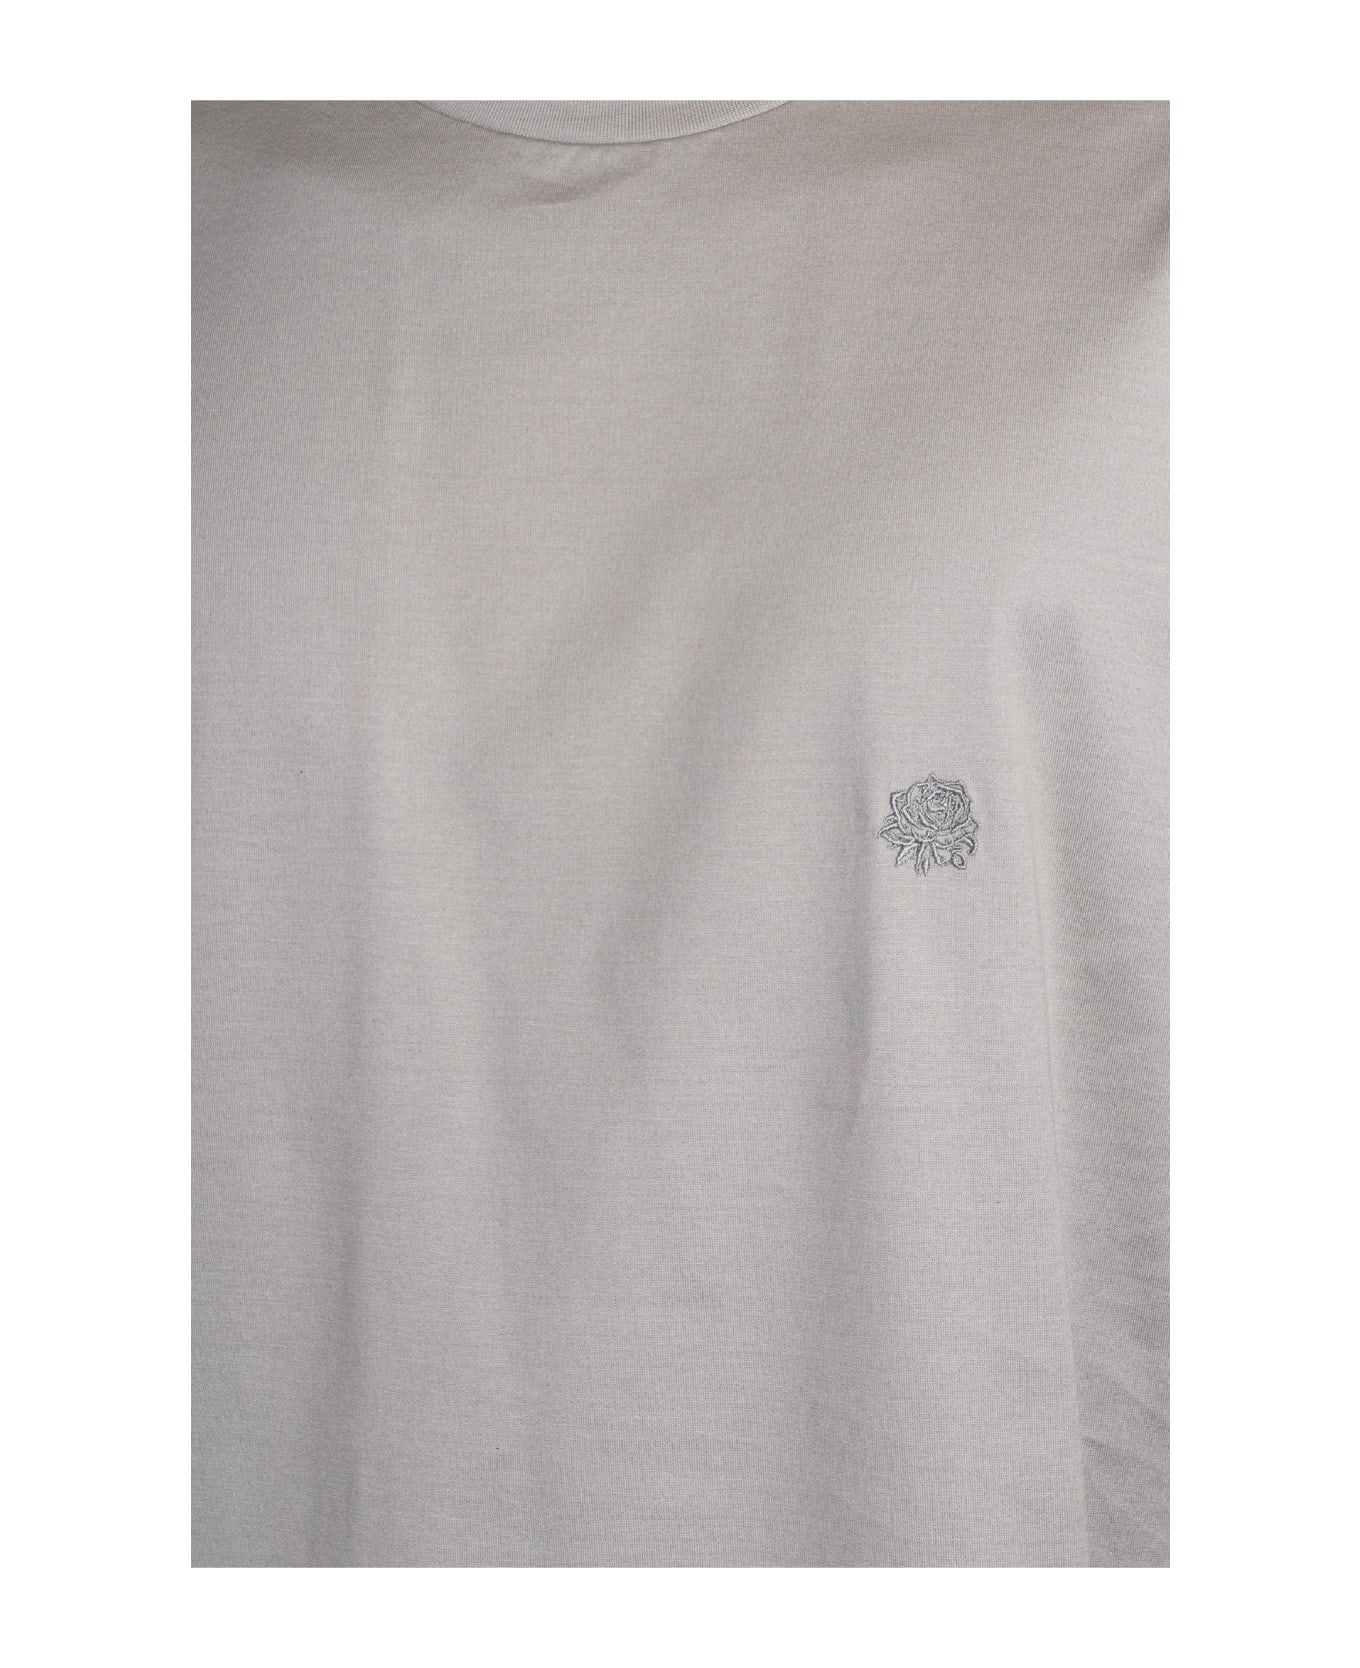 Low Brand B150 Rose T-shirt In Grey Cotton - grey シャツ